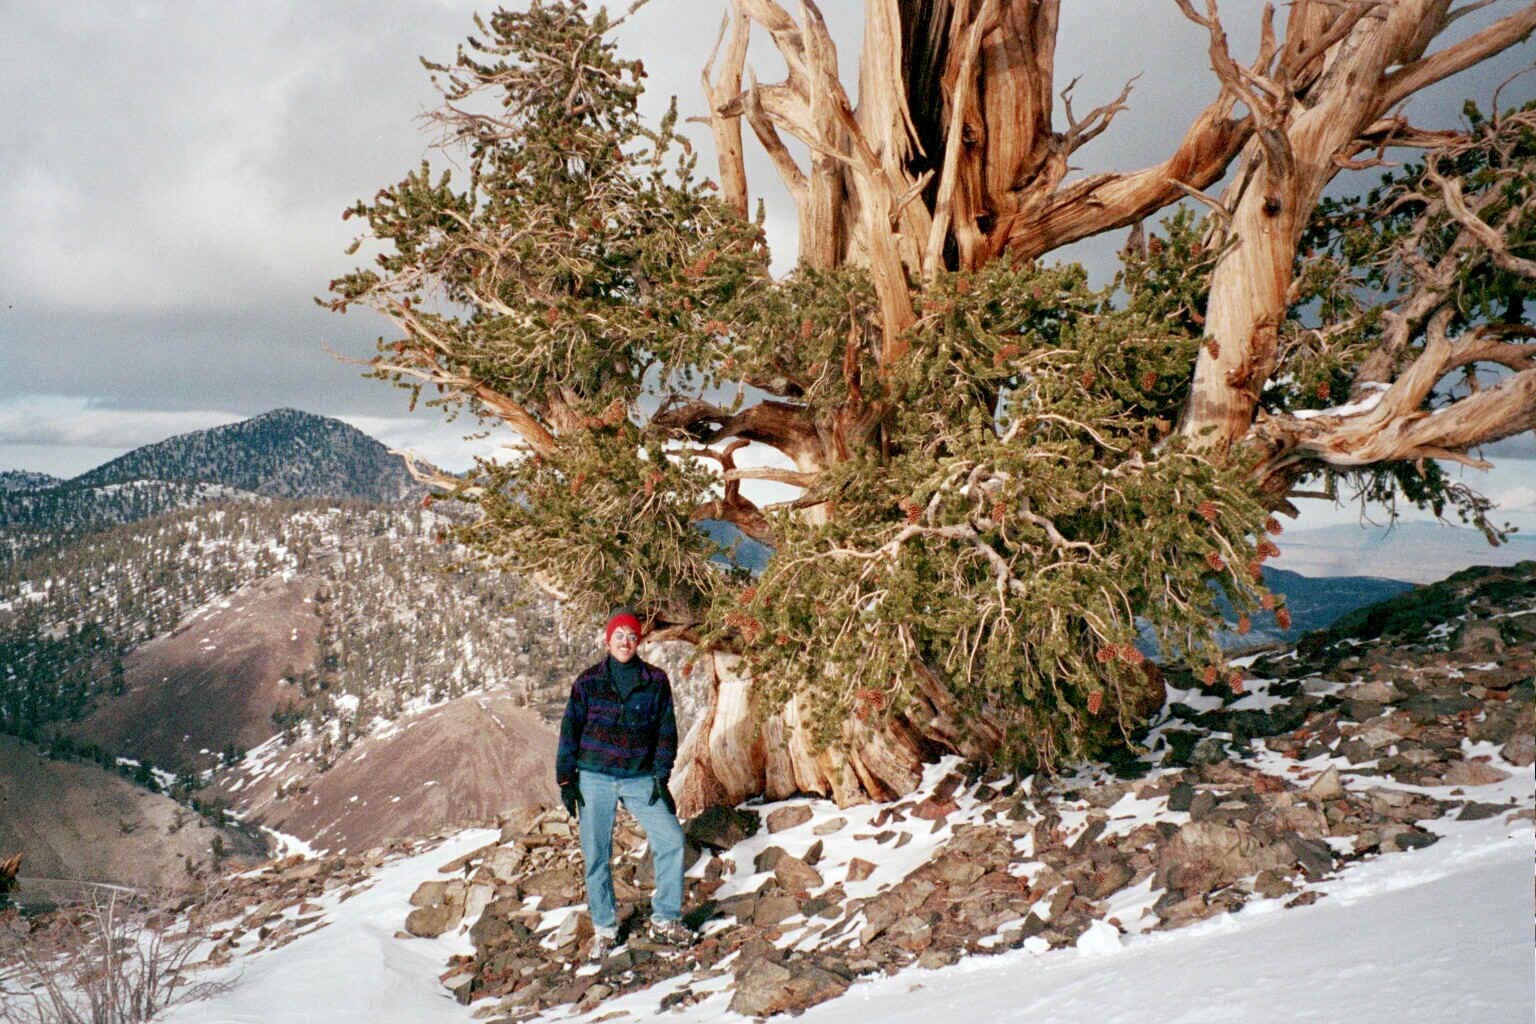 White Mountain Research Station - April 2004